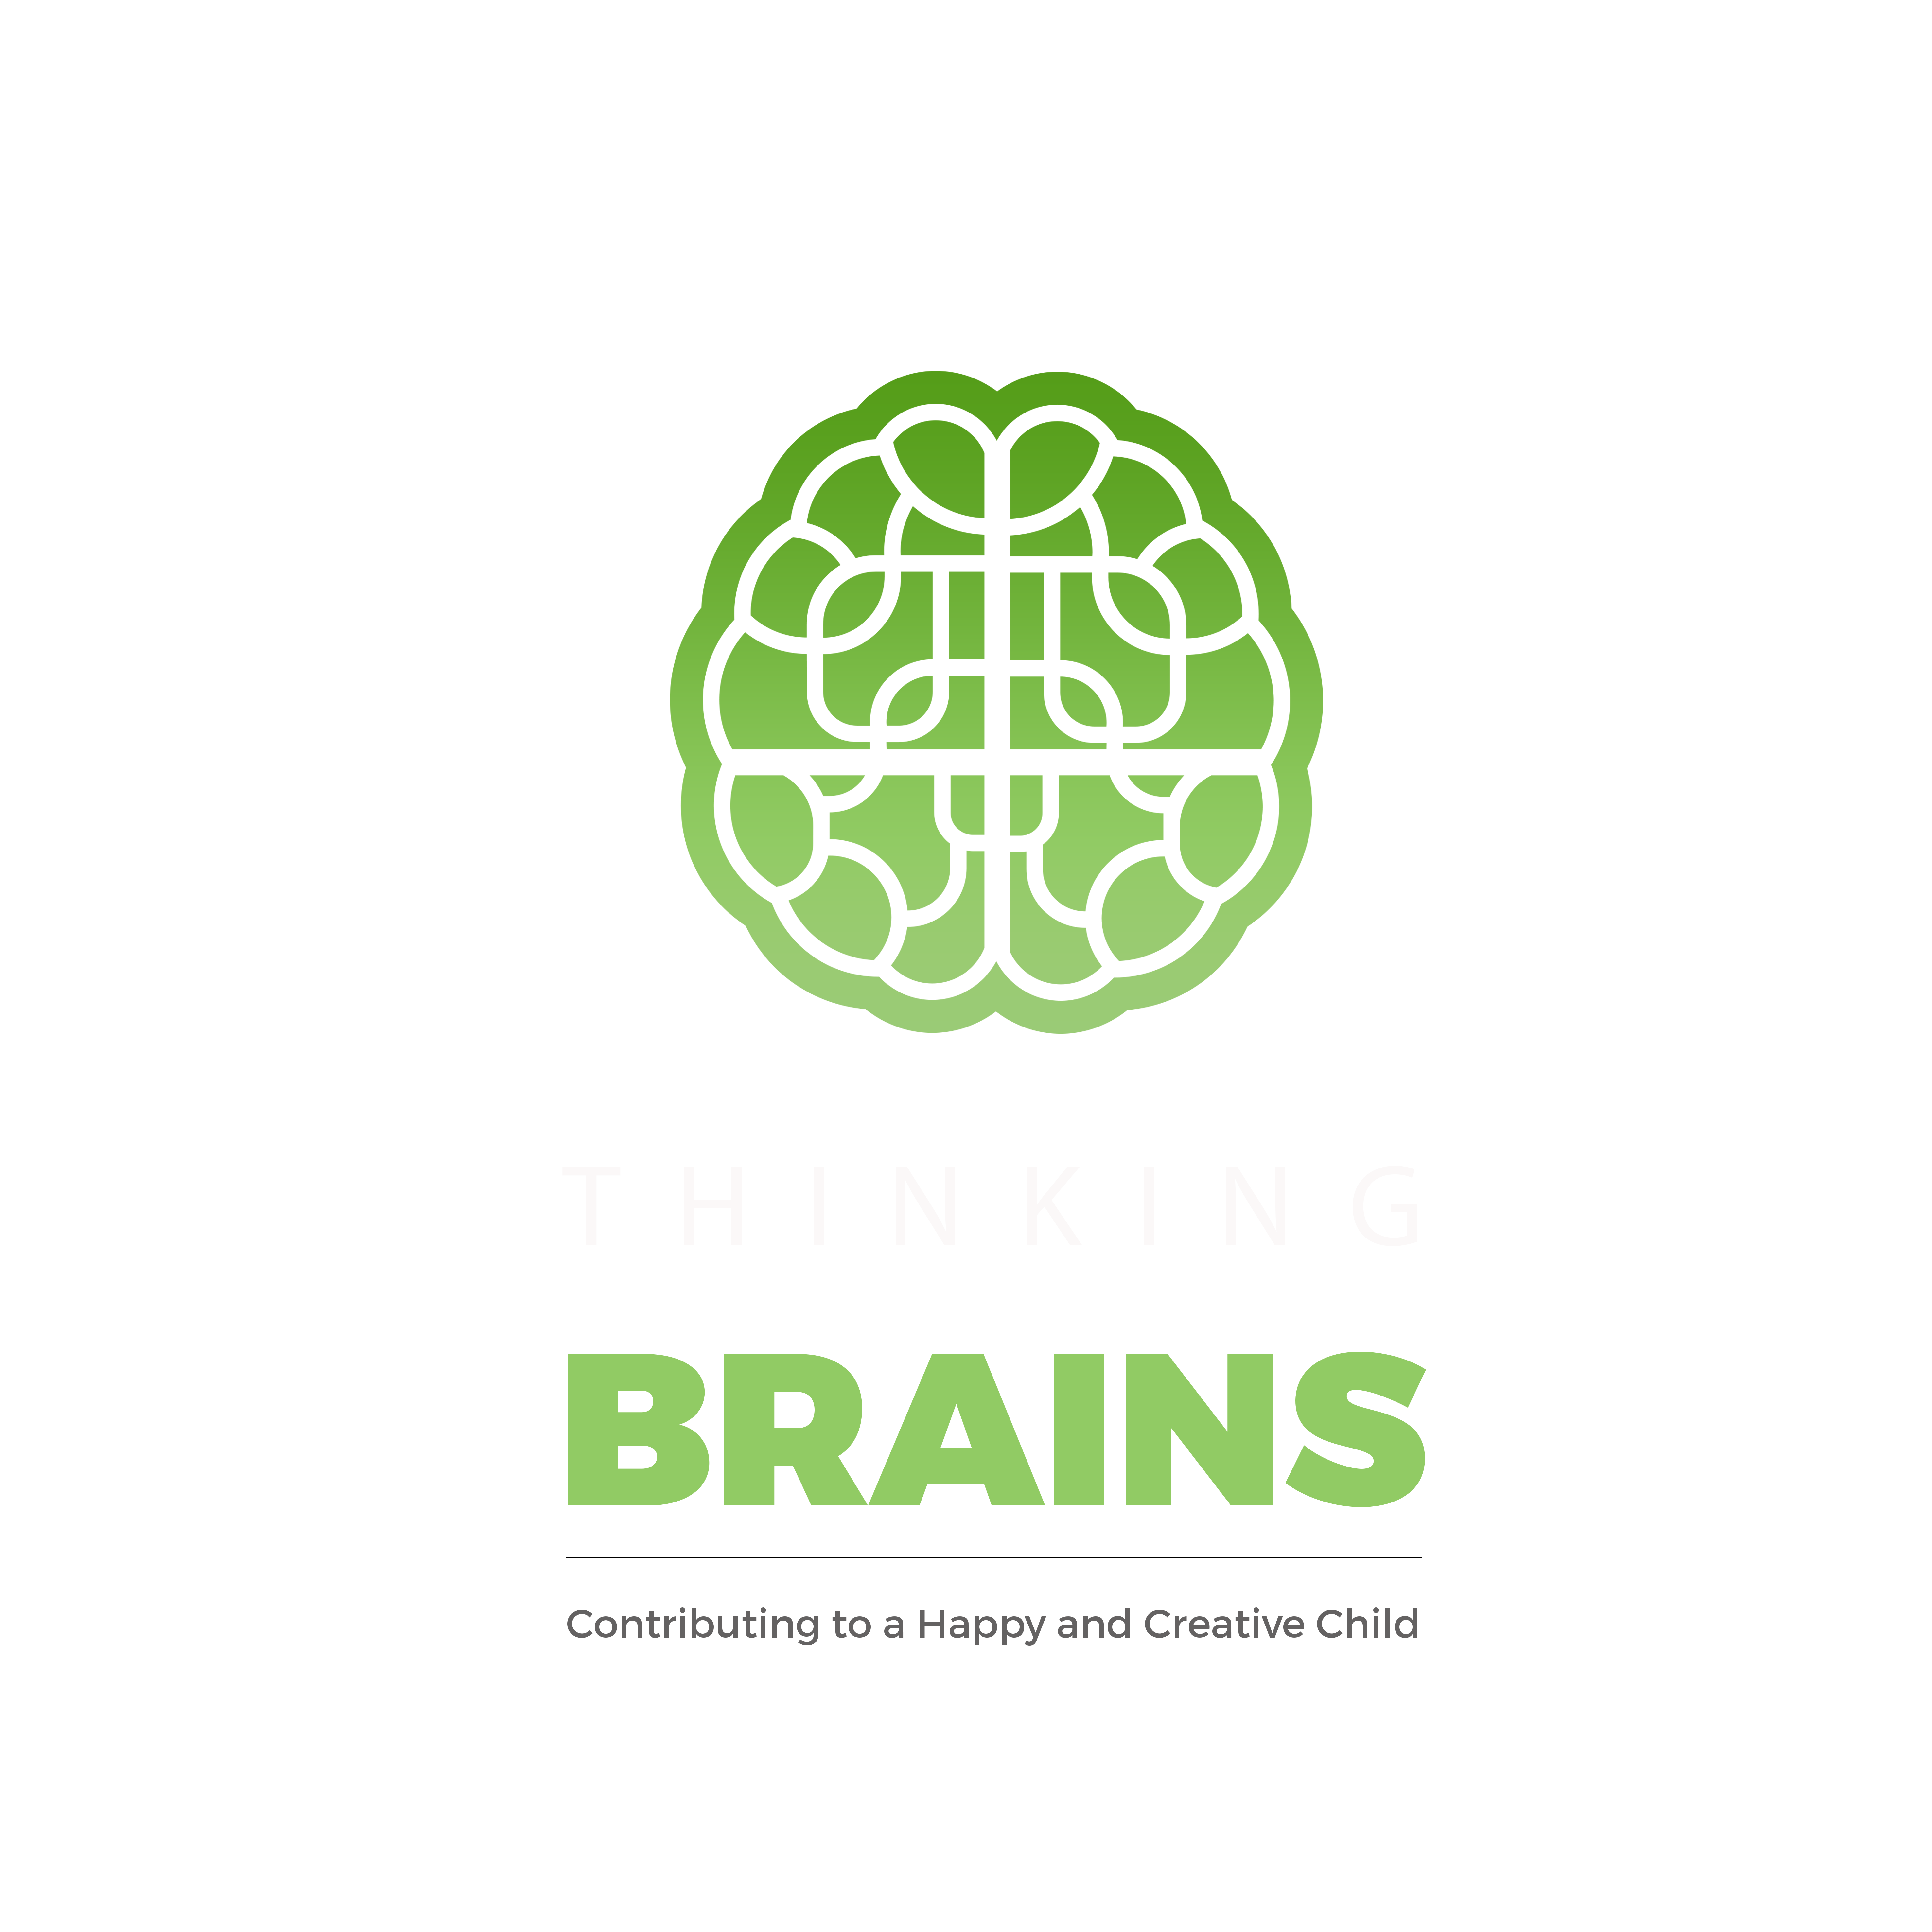 Thinking Brains